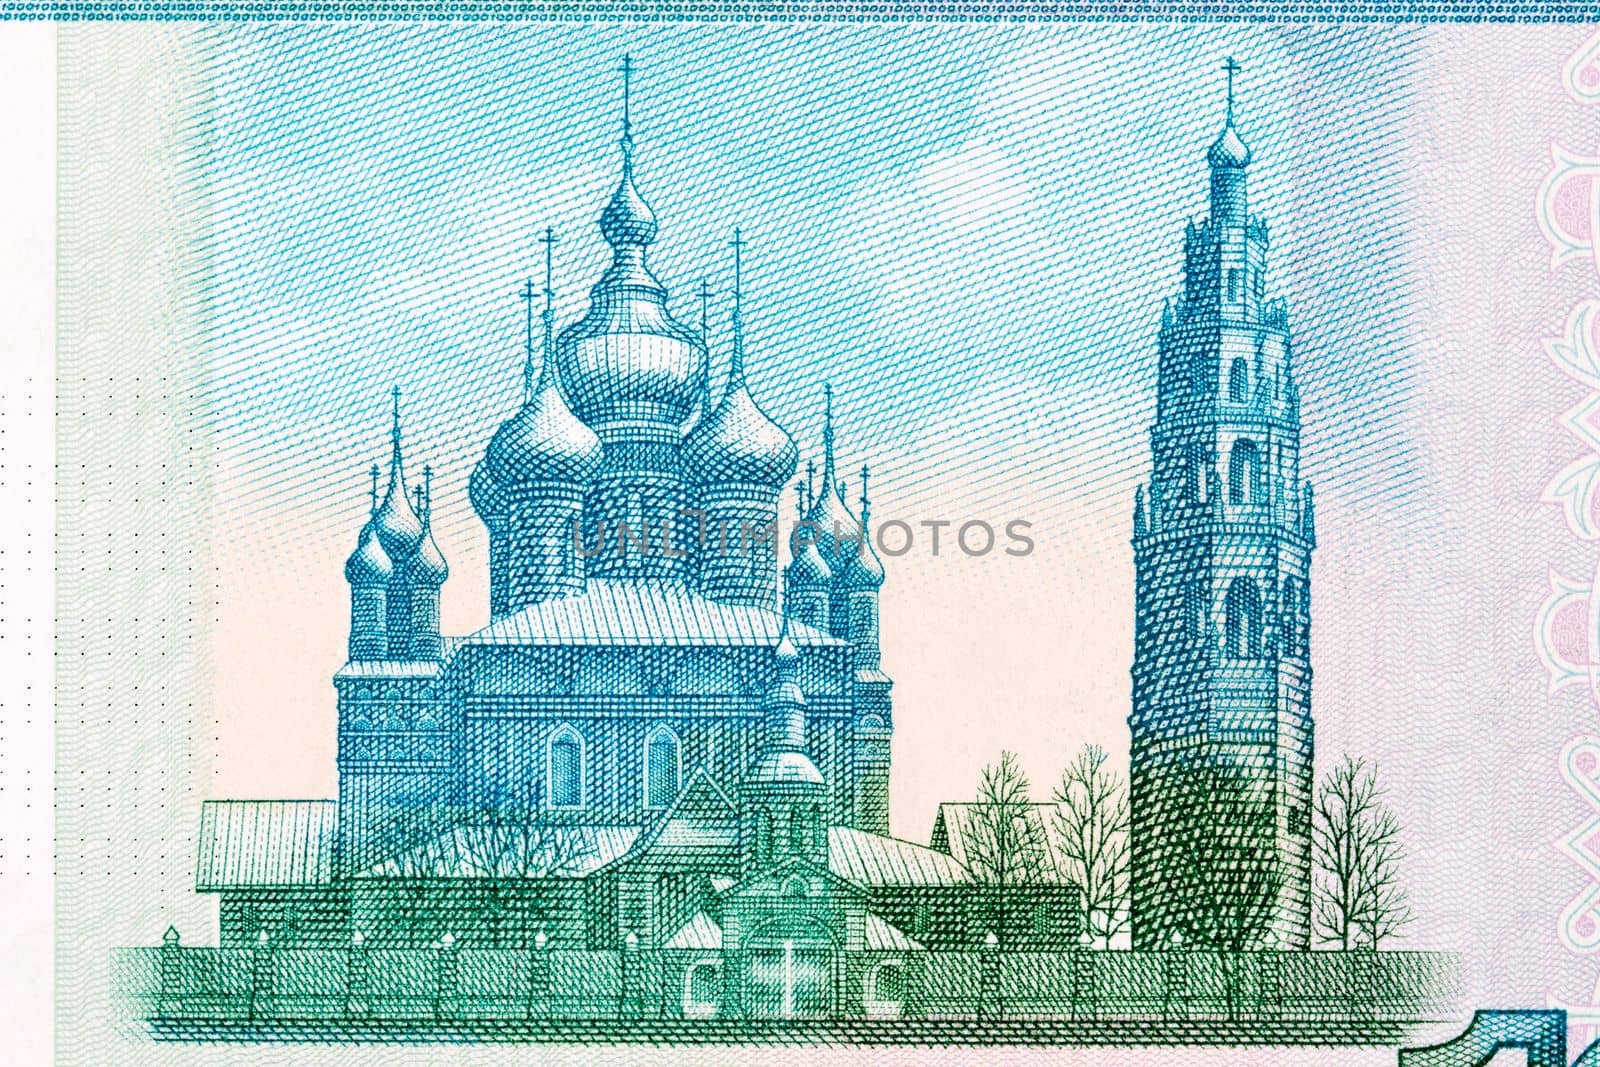 John the Baptist Church from Russian money by johan10